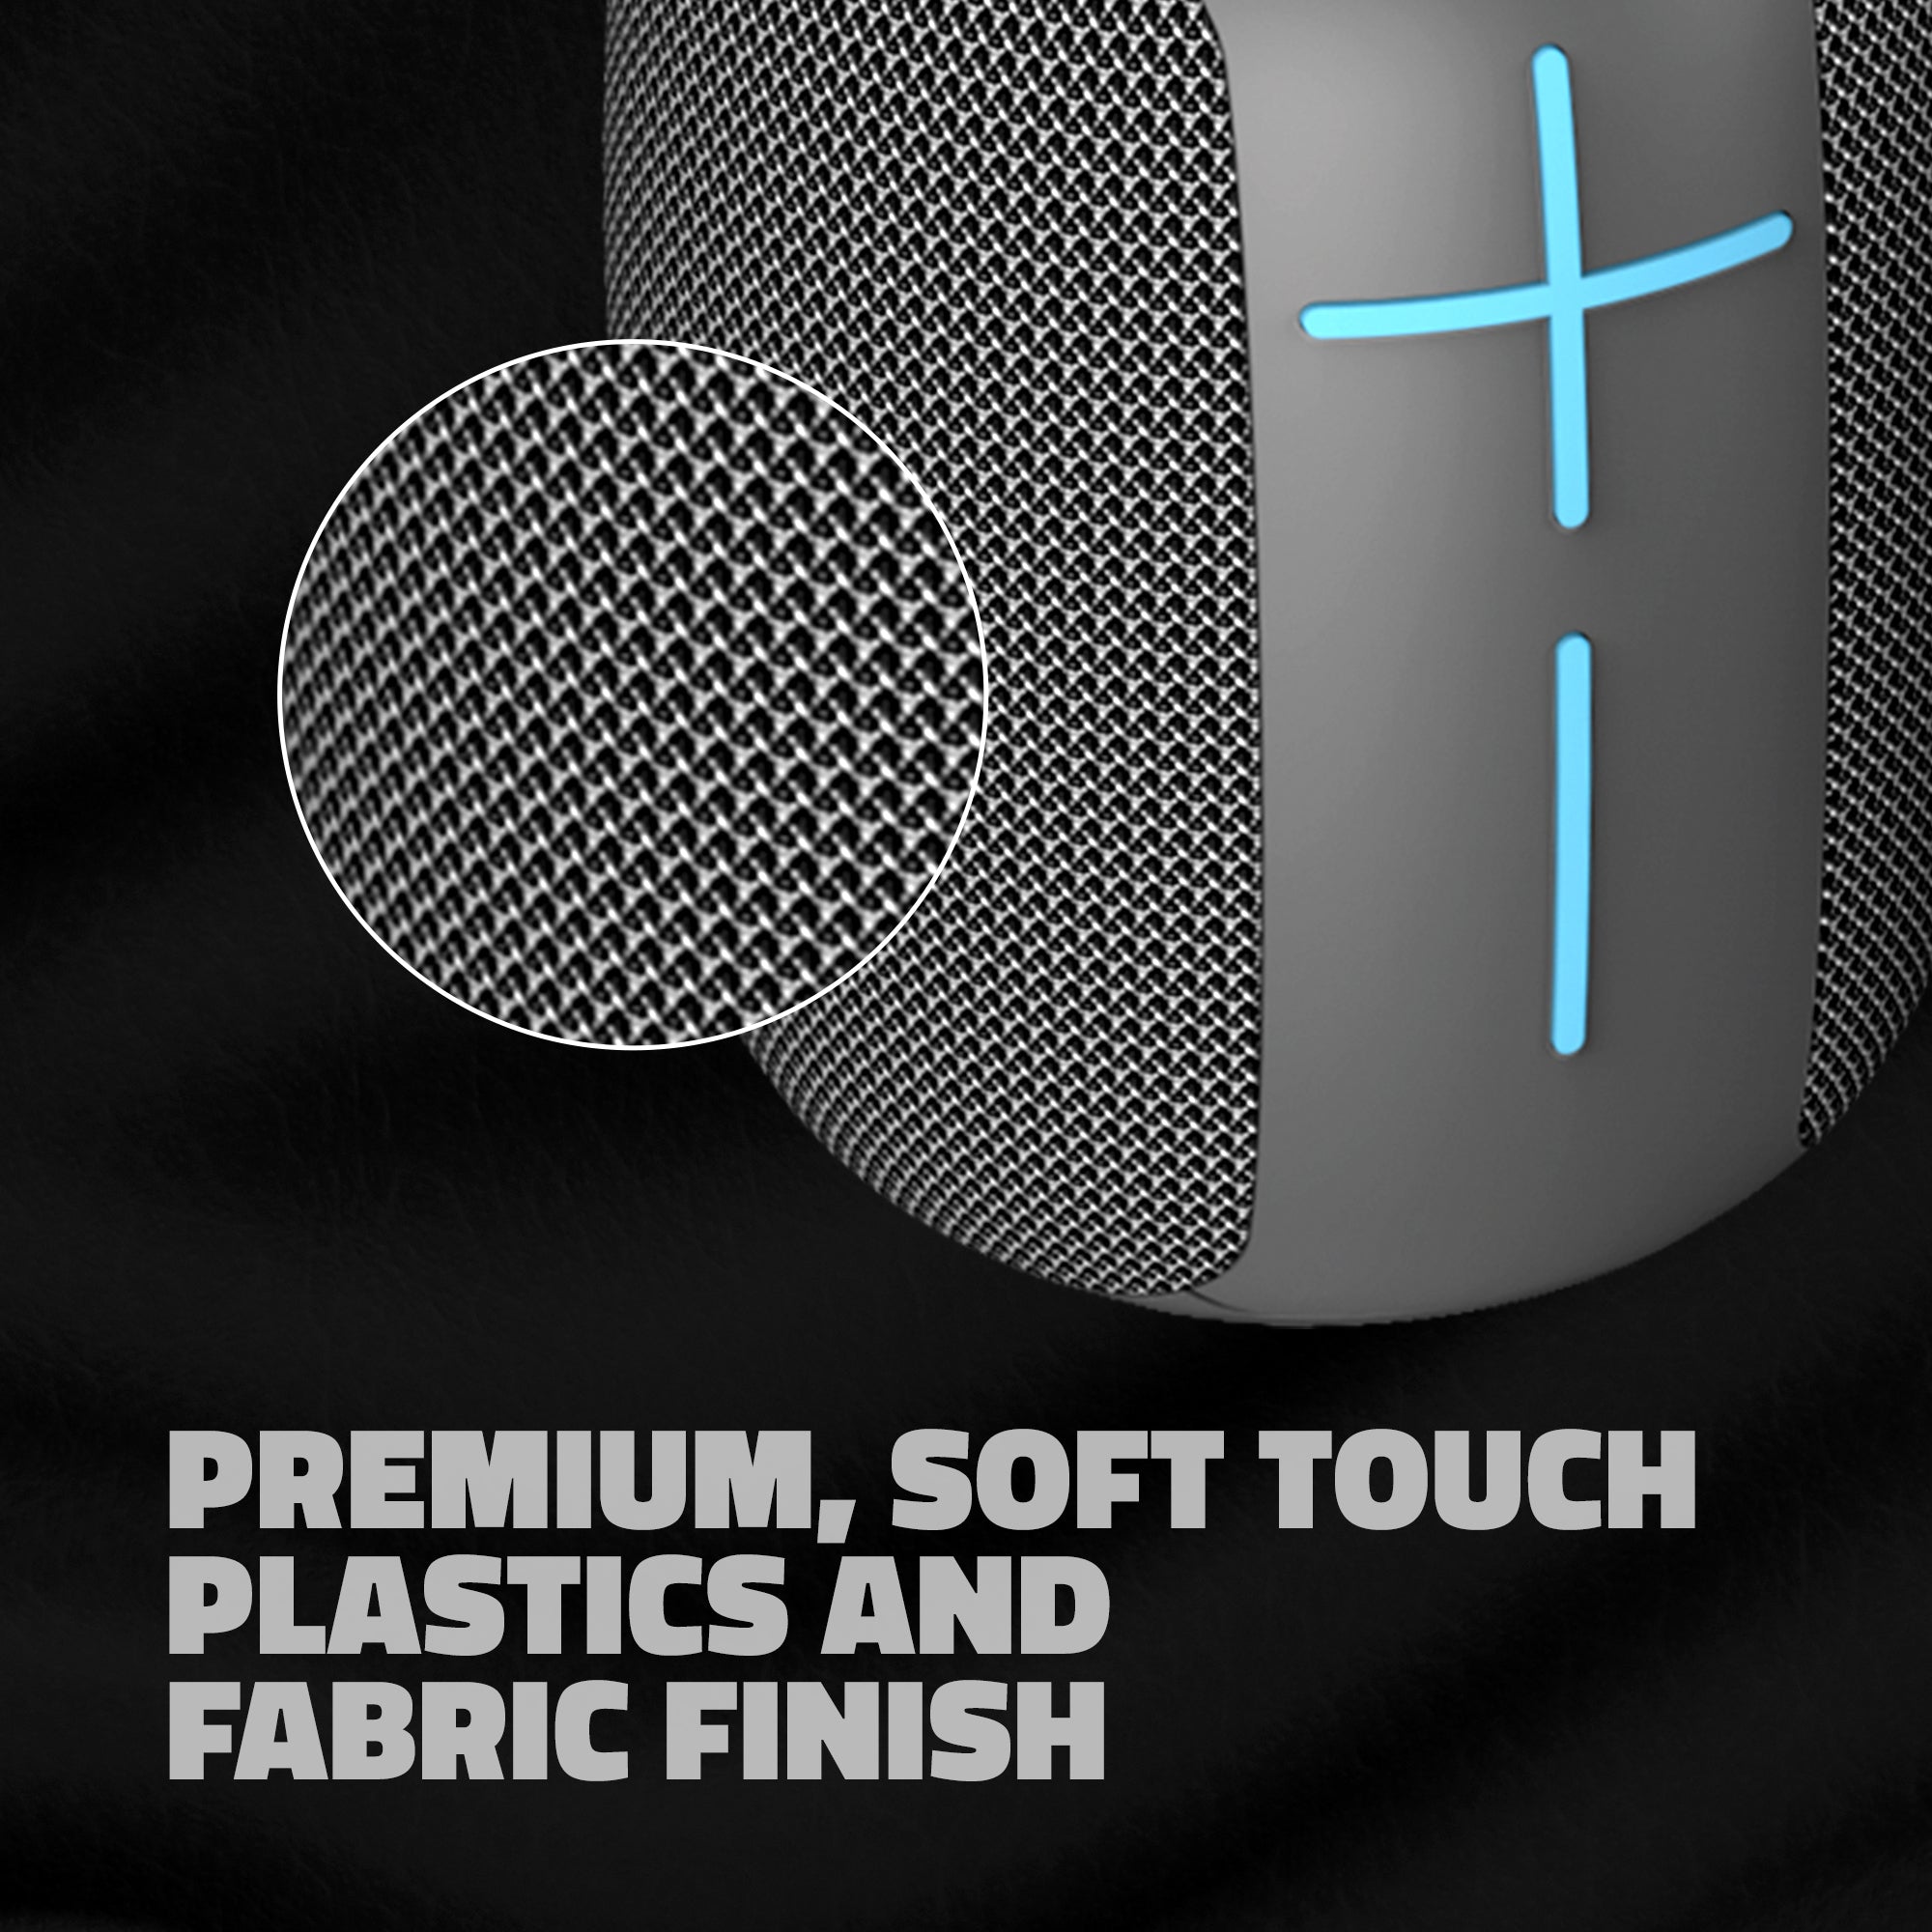 SoundPro 20 15W TWS Portable 5.0 Bluetooth Speaker (Grey)